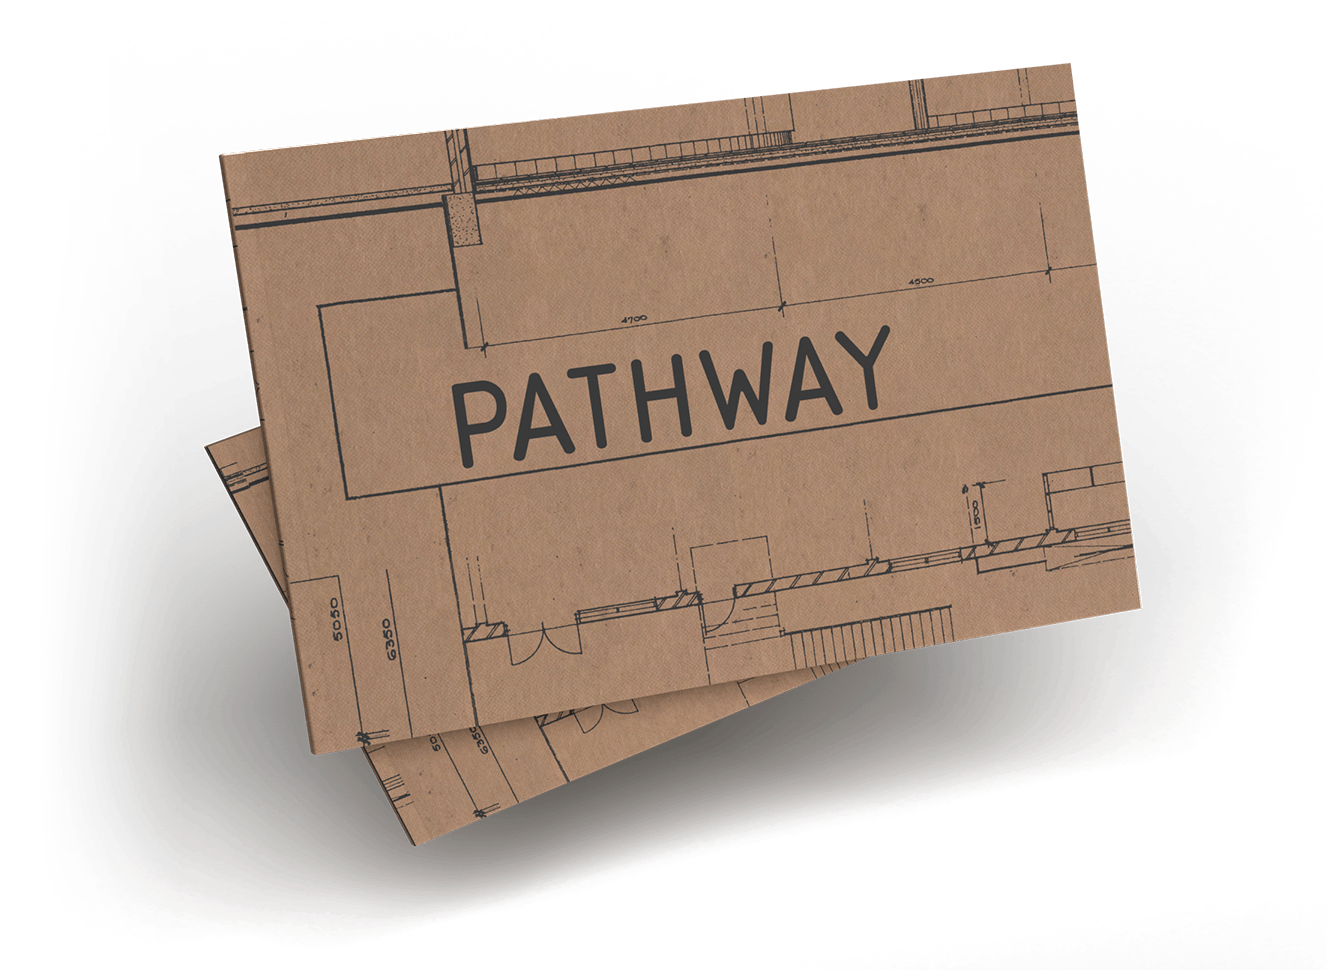 Pathway Book